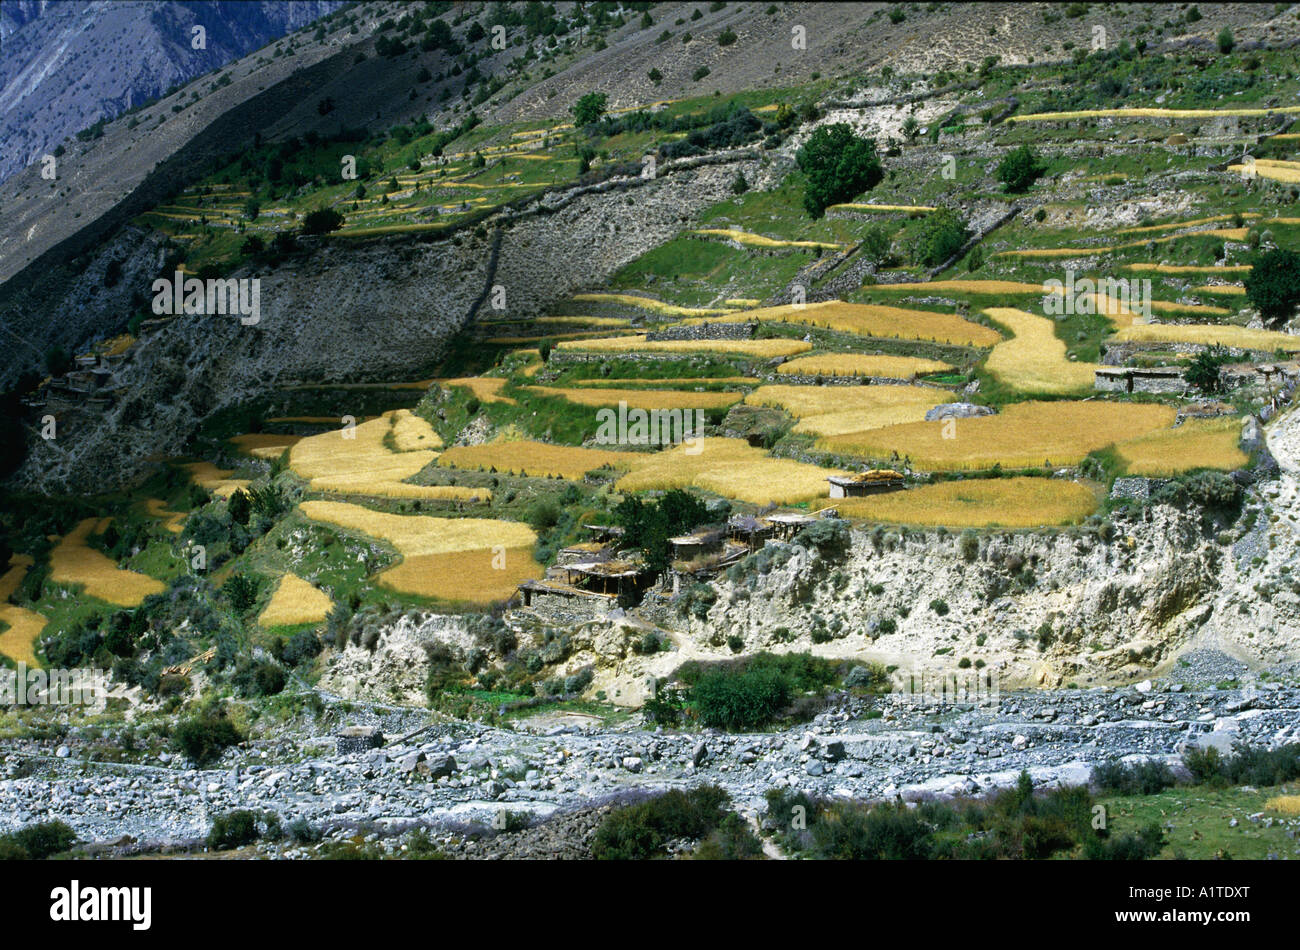 agricultural terraced fields bagrot valley region of karakoram pakistan Stock Photo